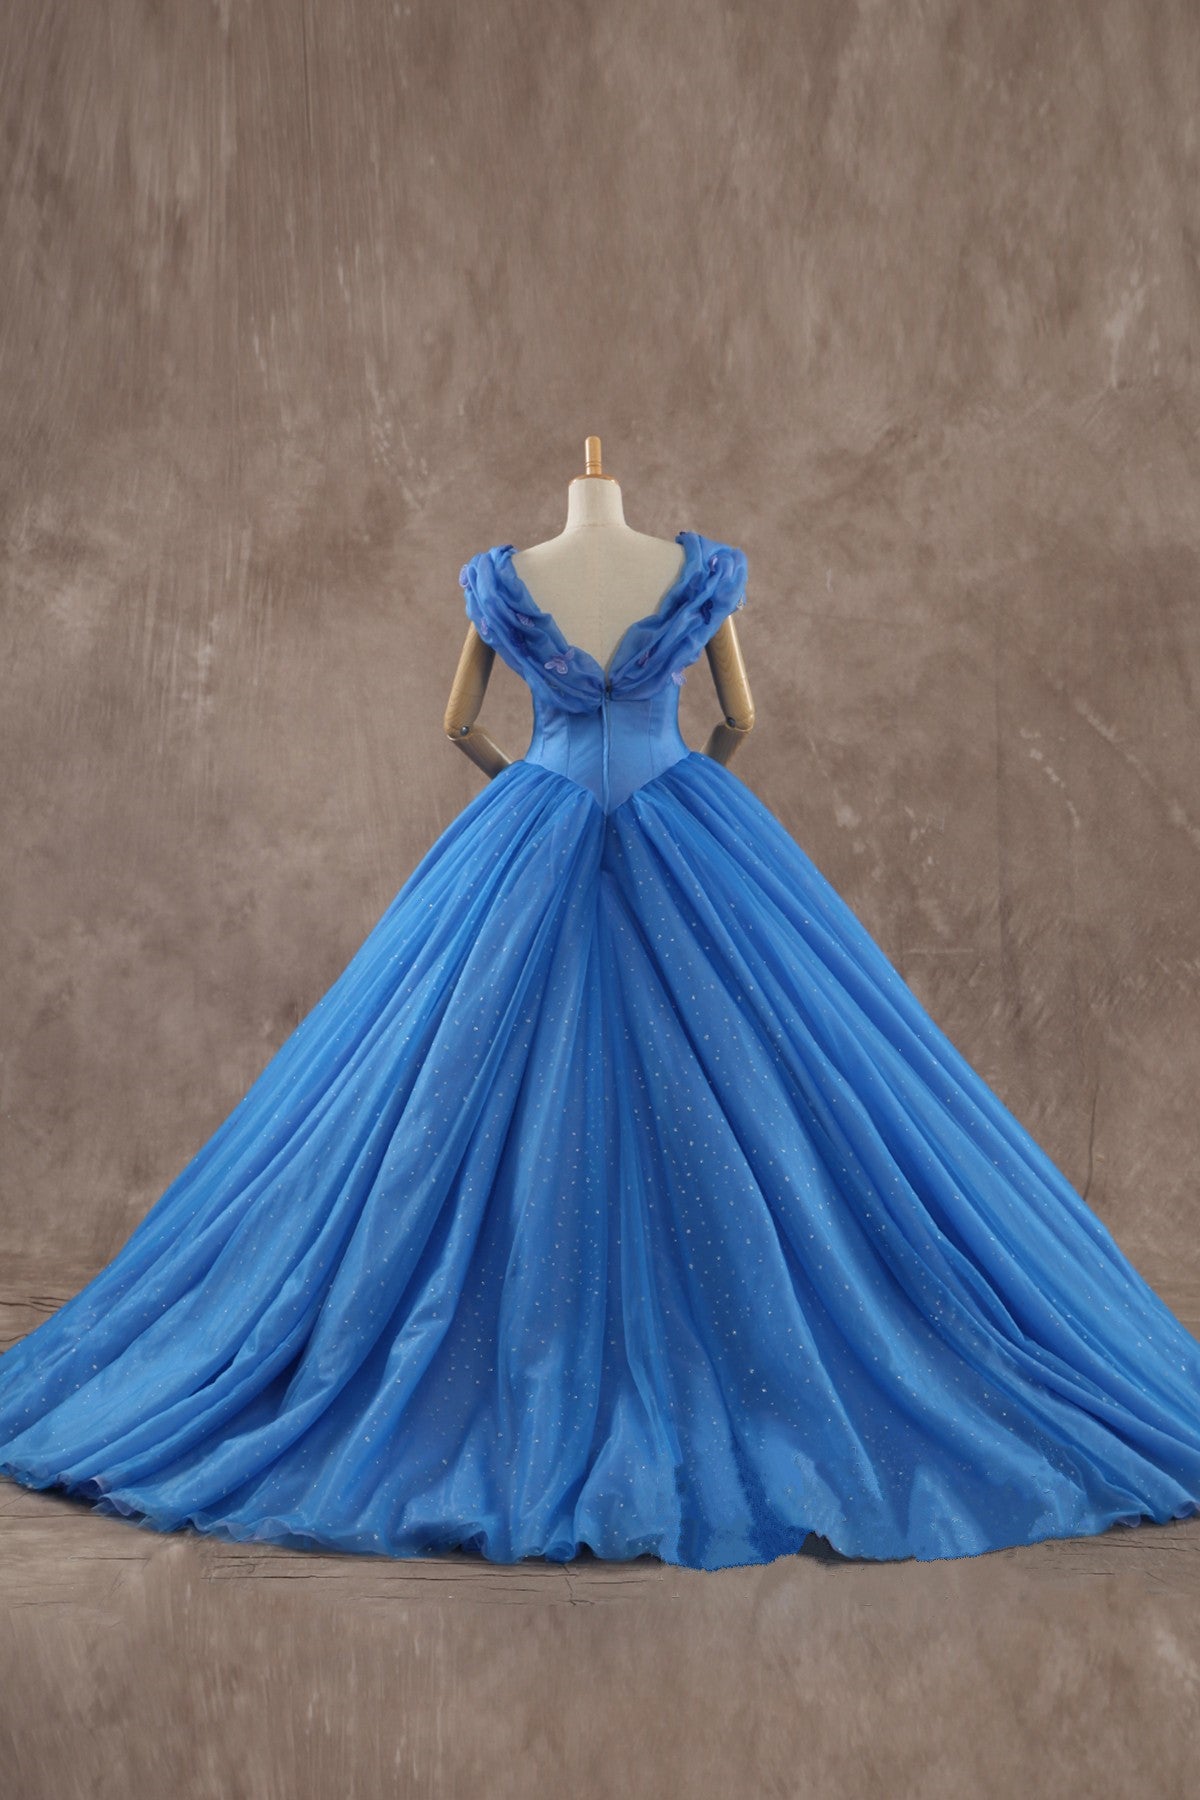 Disney Princess Blue Masquerade Ball Gown Cinderella Prom Dress - DollyGownDisney Princess Blue Masquerade Ball Gown Cinderella Prom Dress - DollyGown